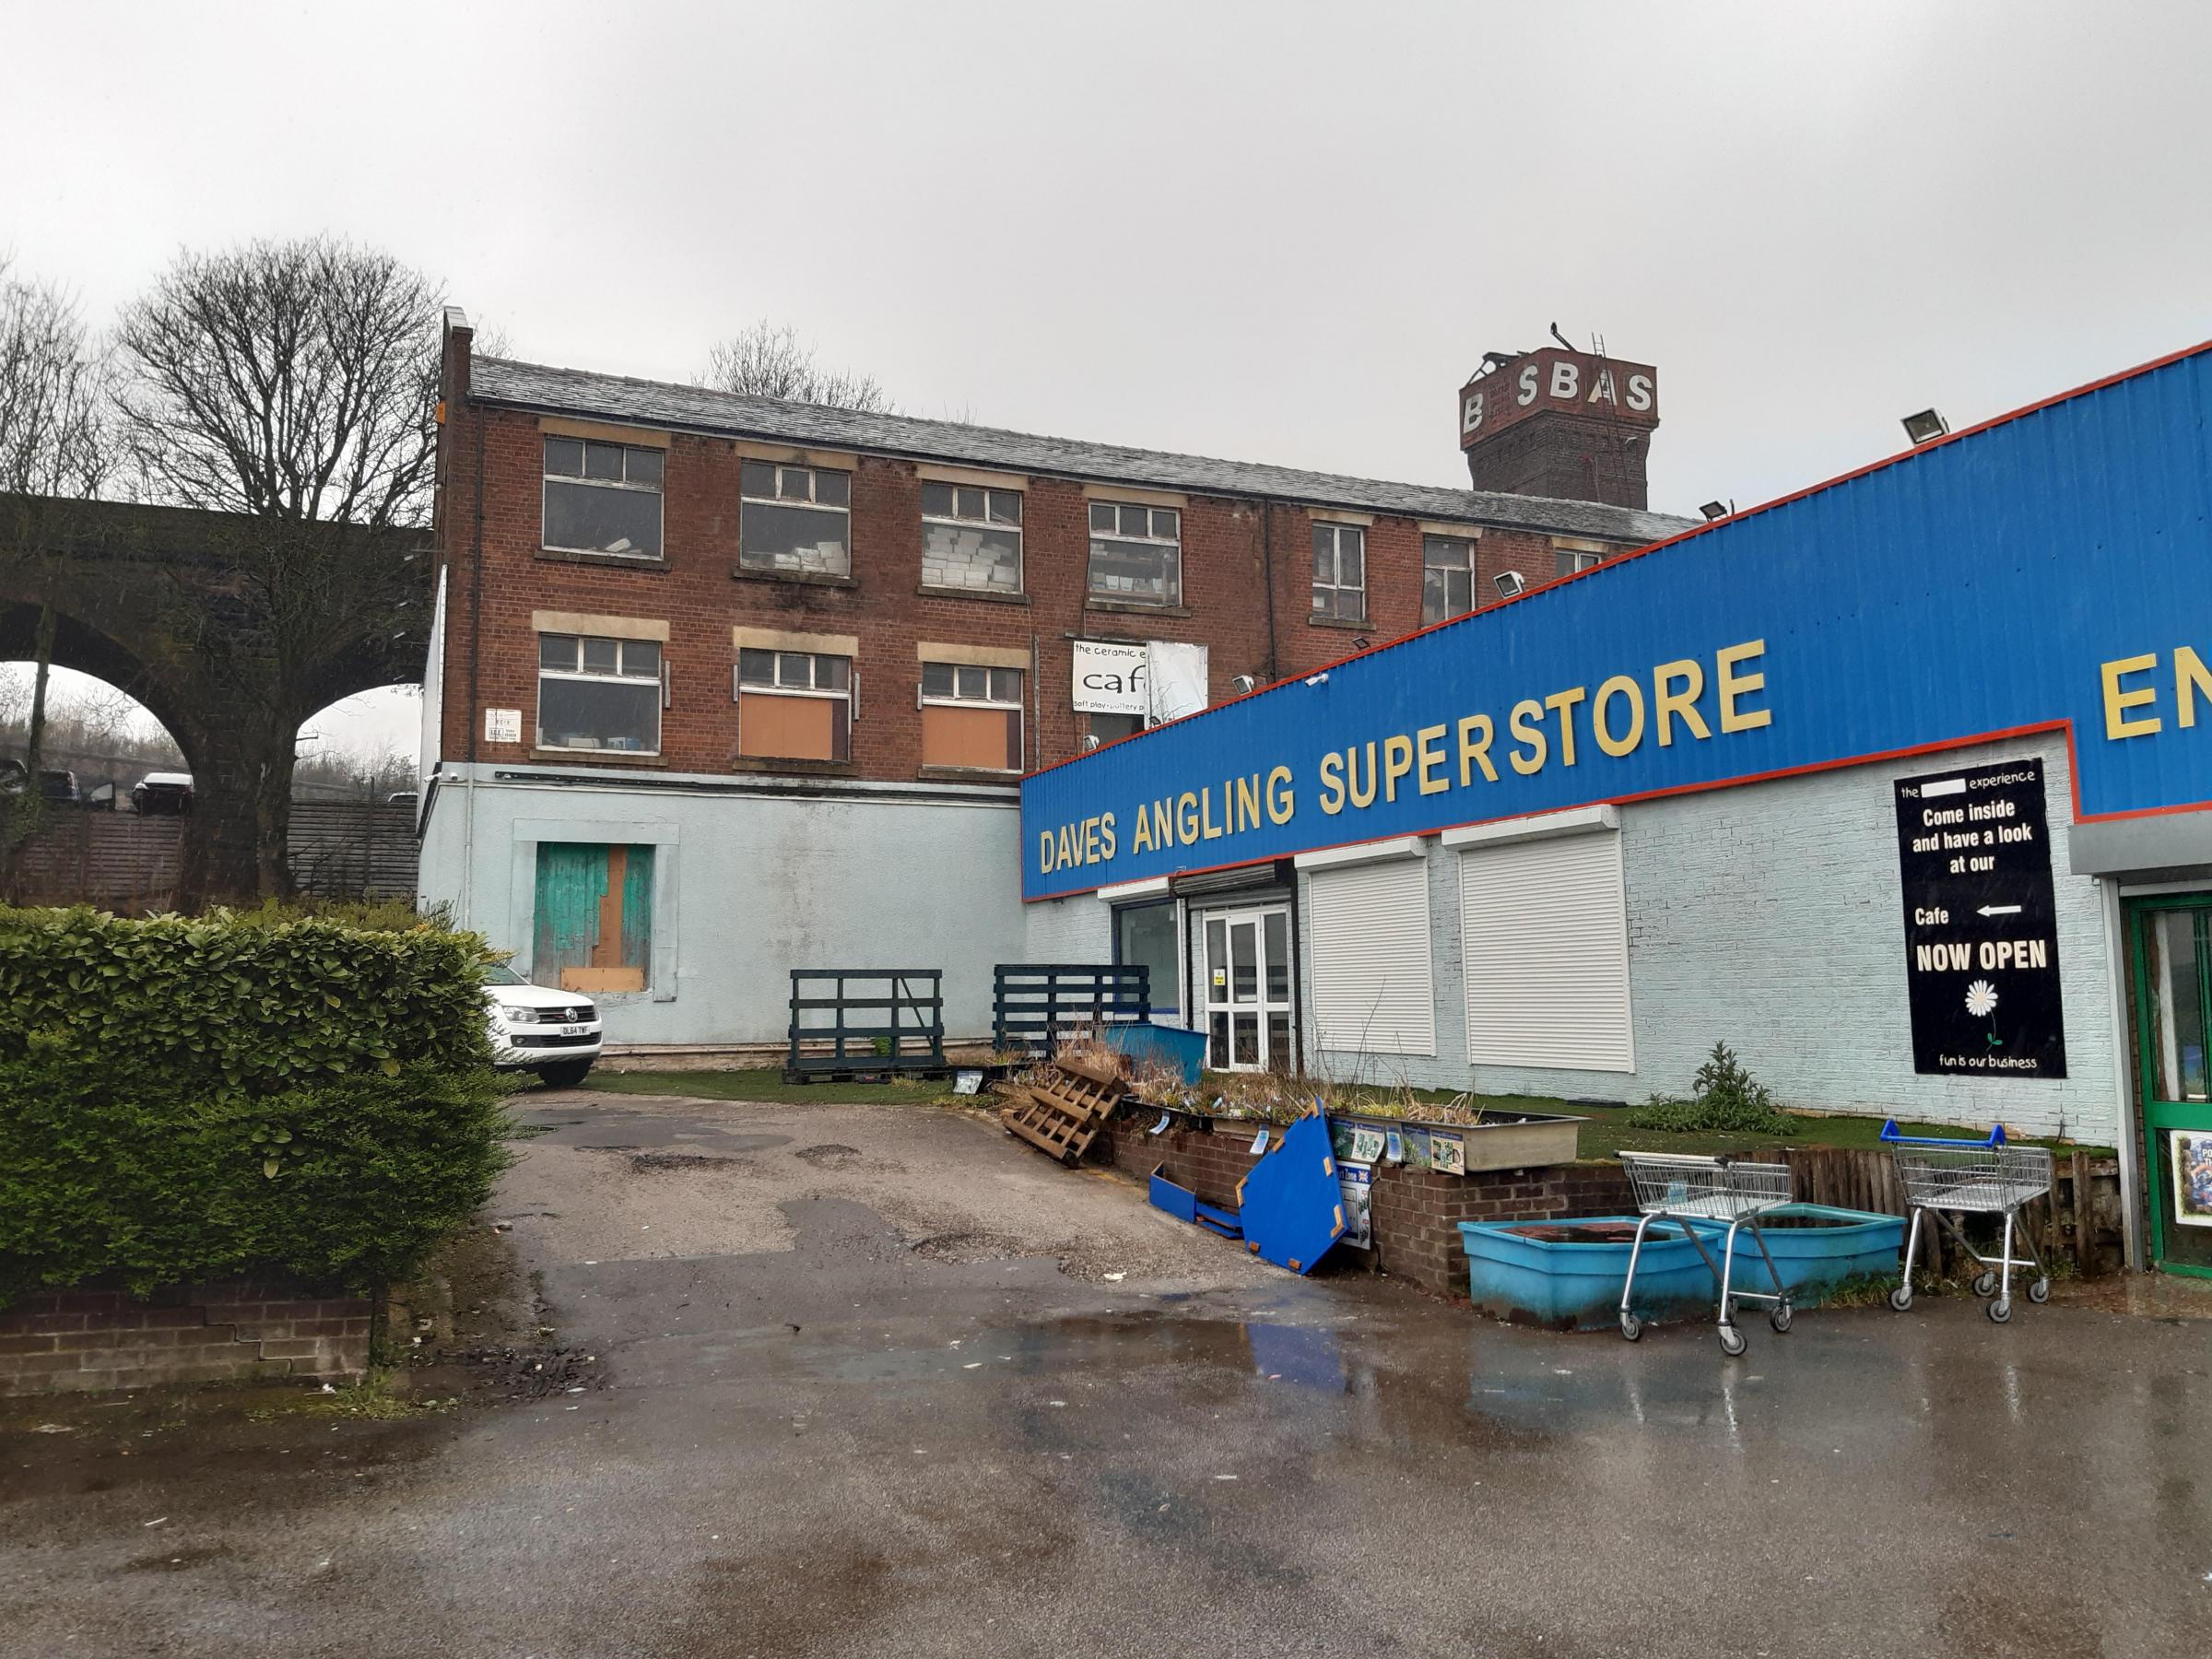 Bolton swingers club plan next to Daves Aquarium on Folds Road Lancashire Telegraph pic